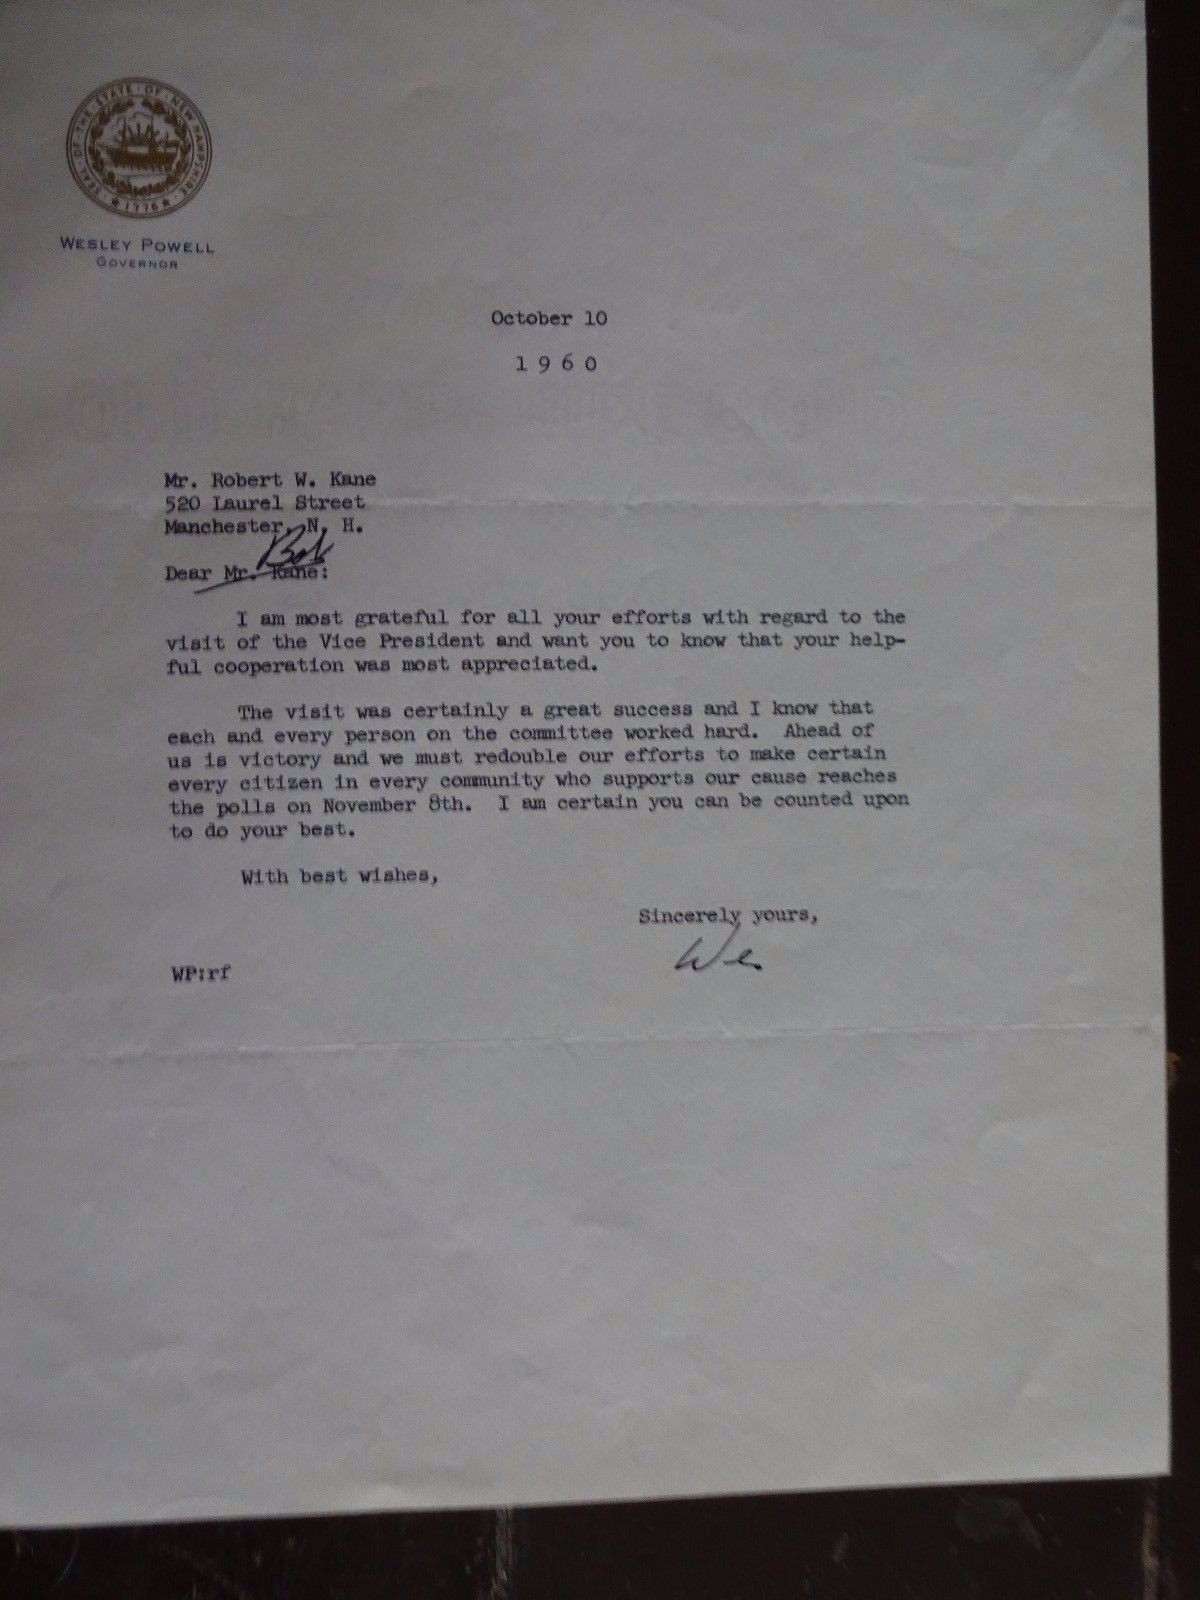 Wesley Powell/Gov. NH - ORIGINAL TYPED Letter - October 10, 1960